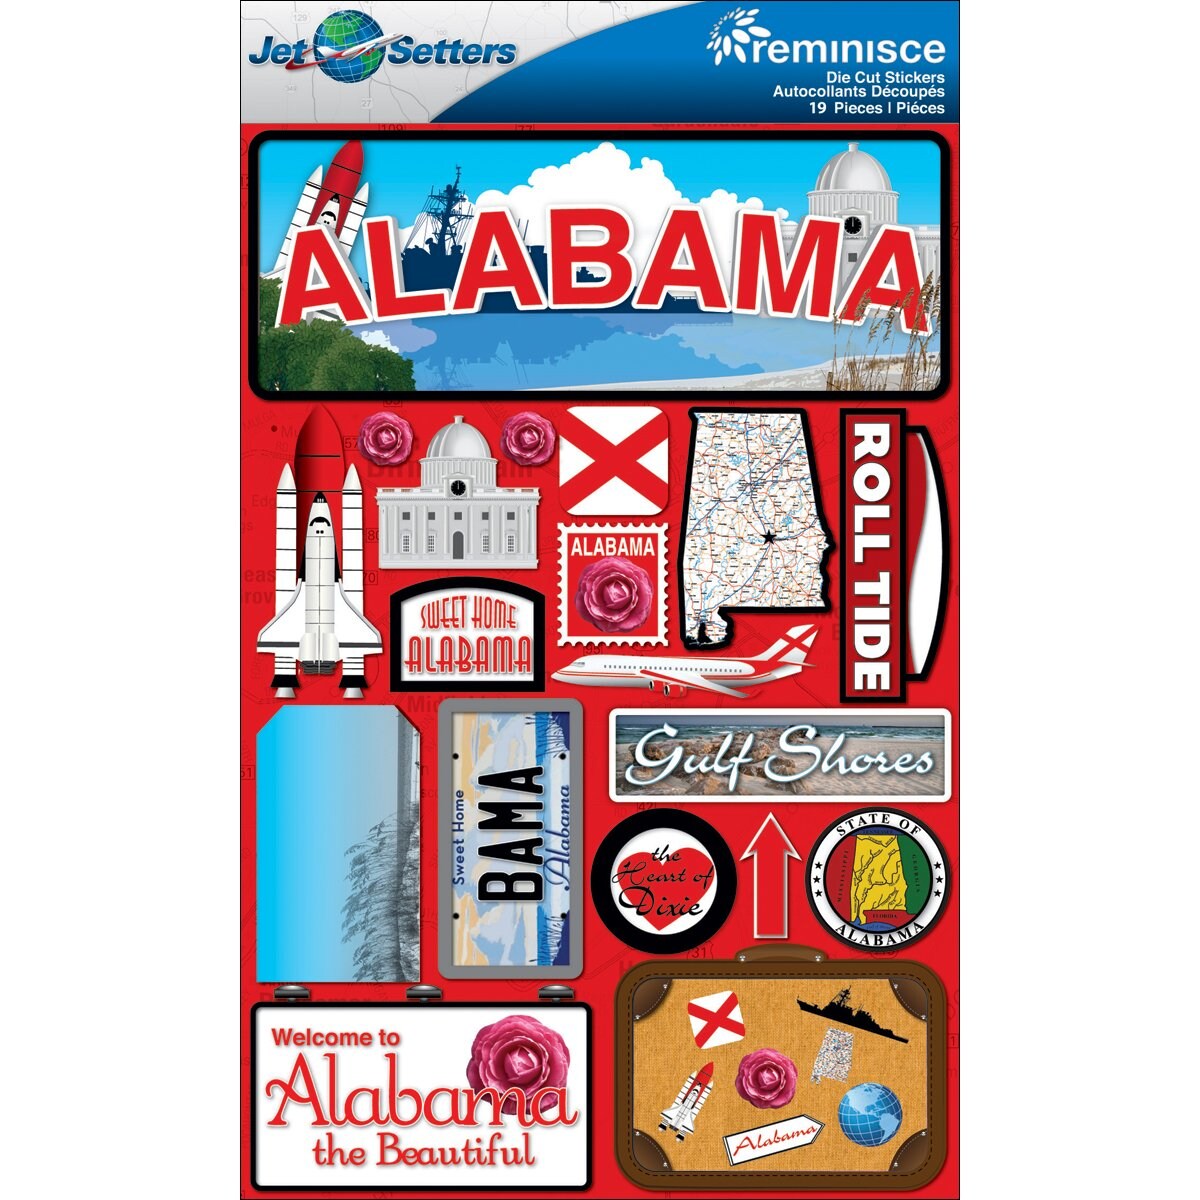 Reminisce Alabama Jetsetters 3D Stickers | Michaels